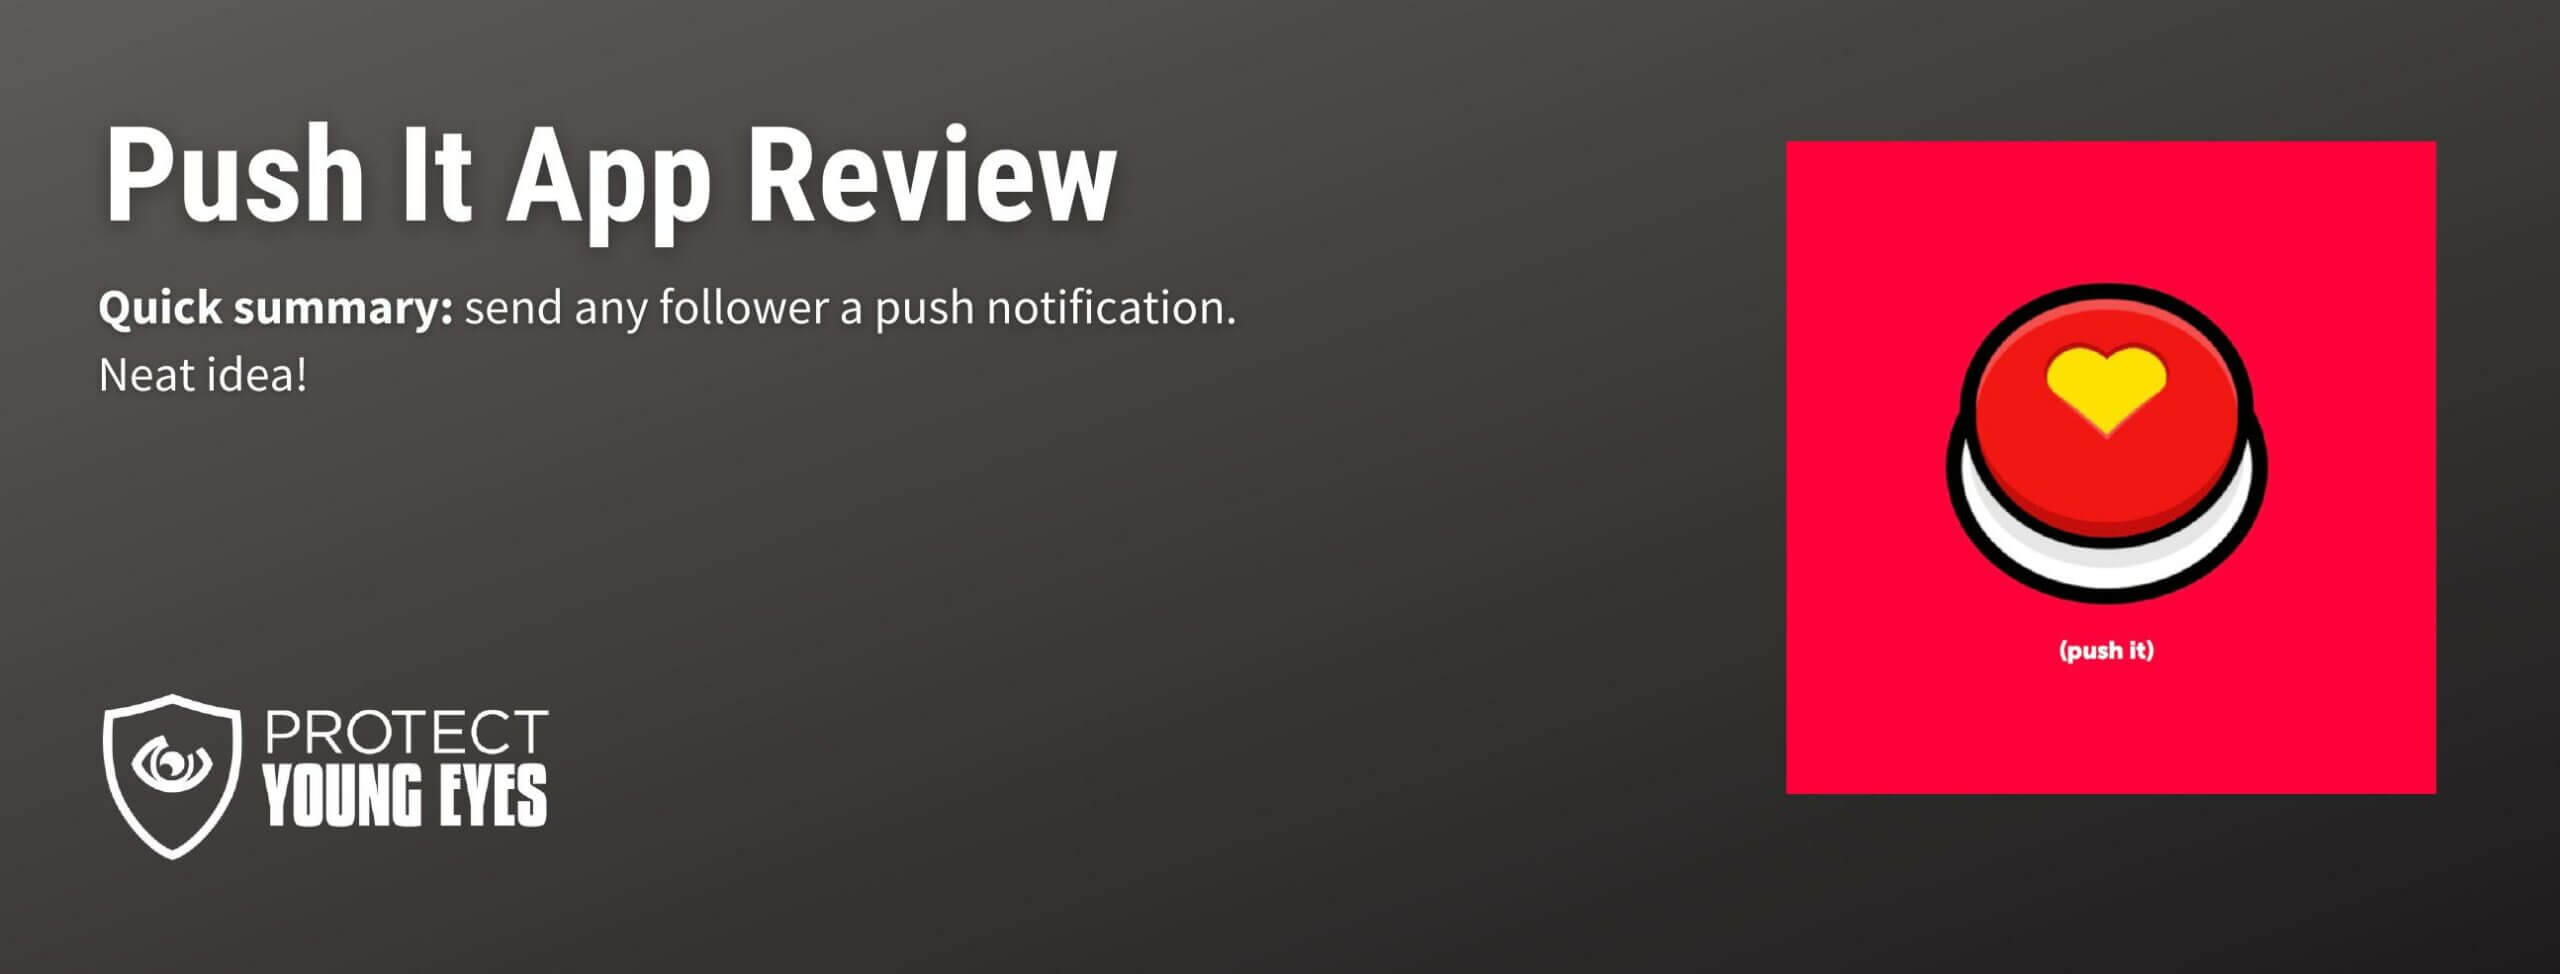 Push It App Review Header Image B